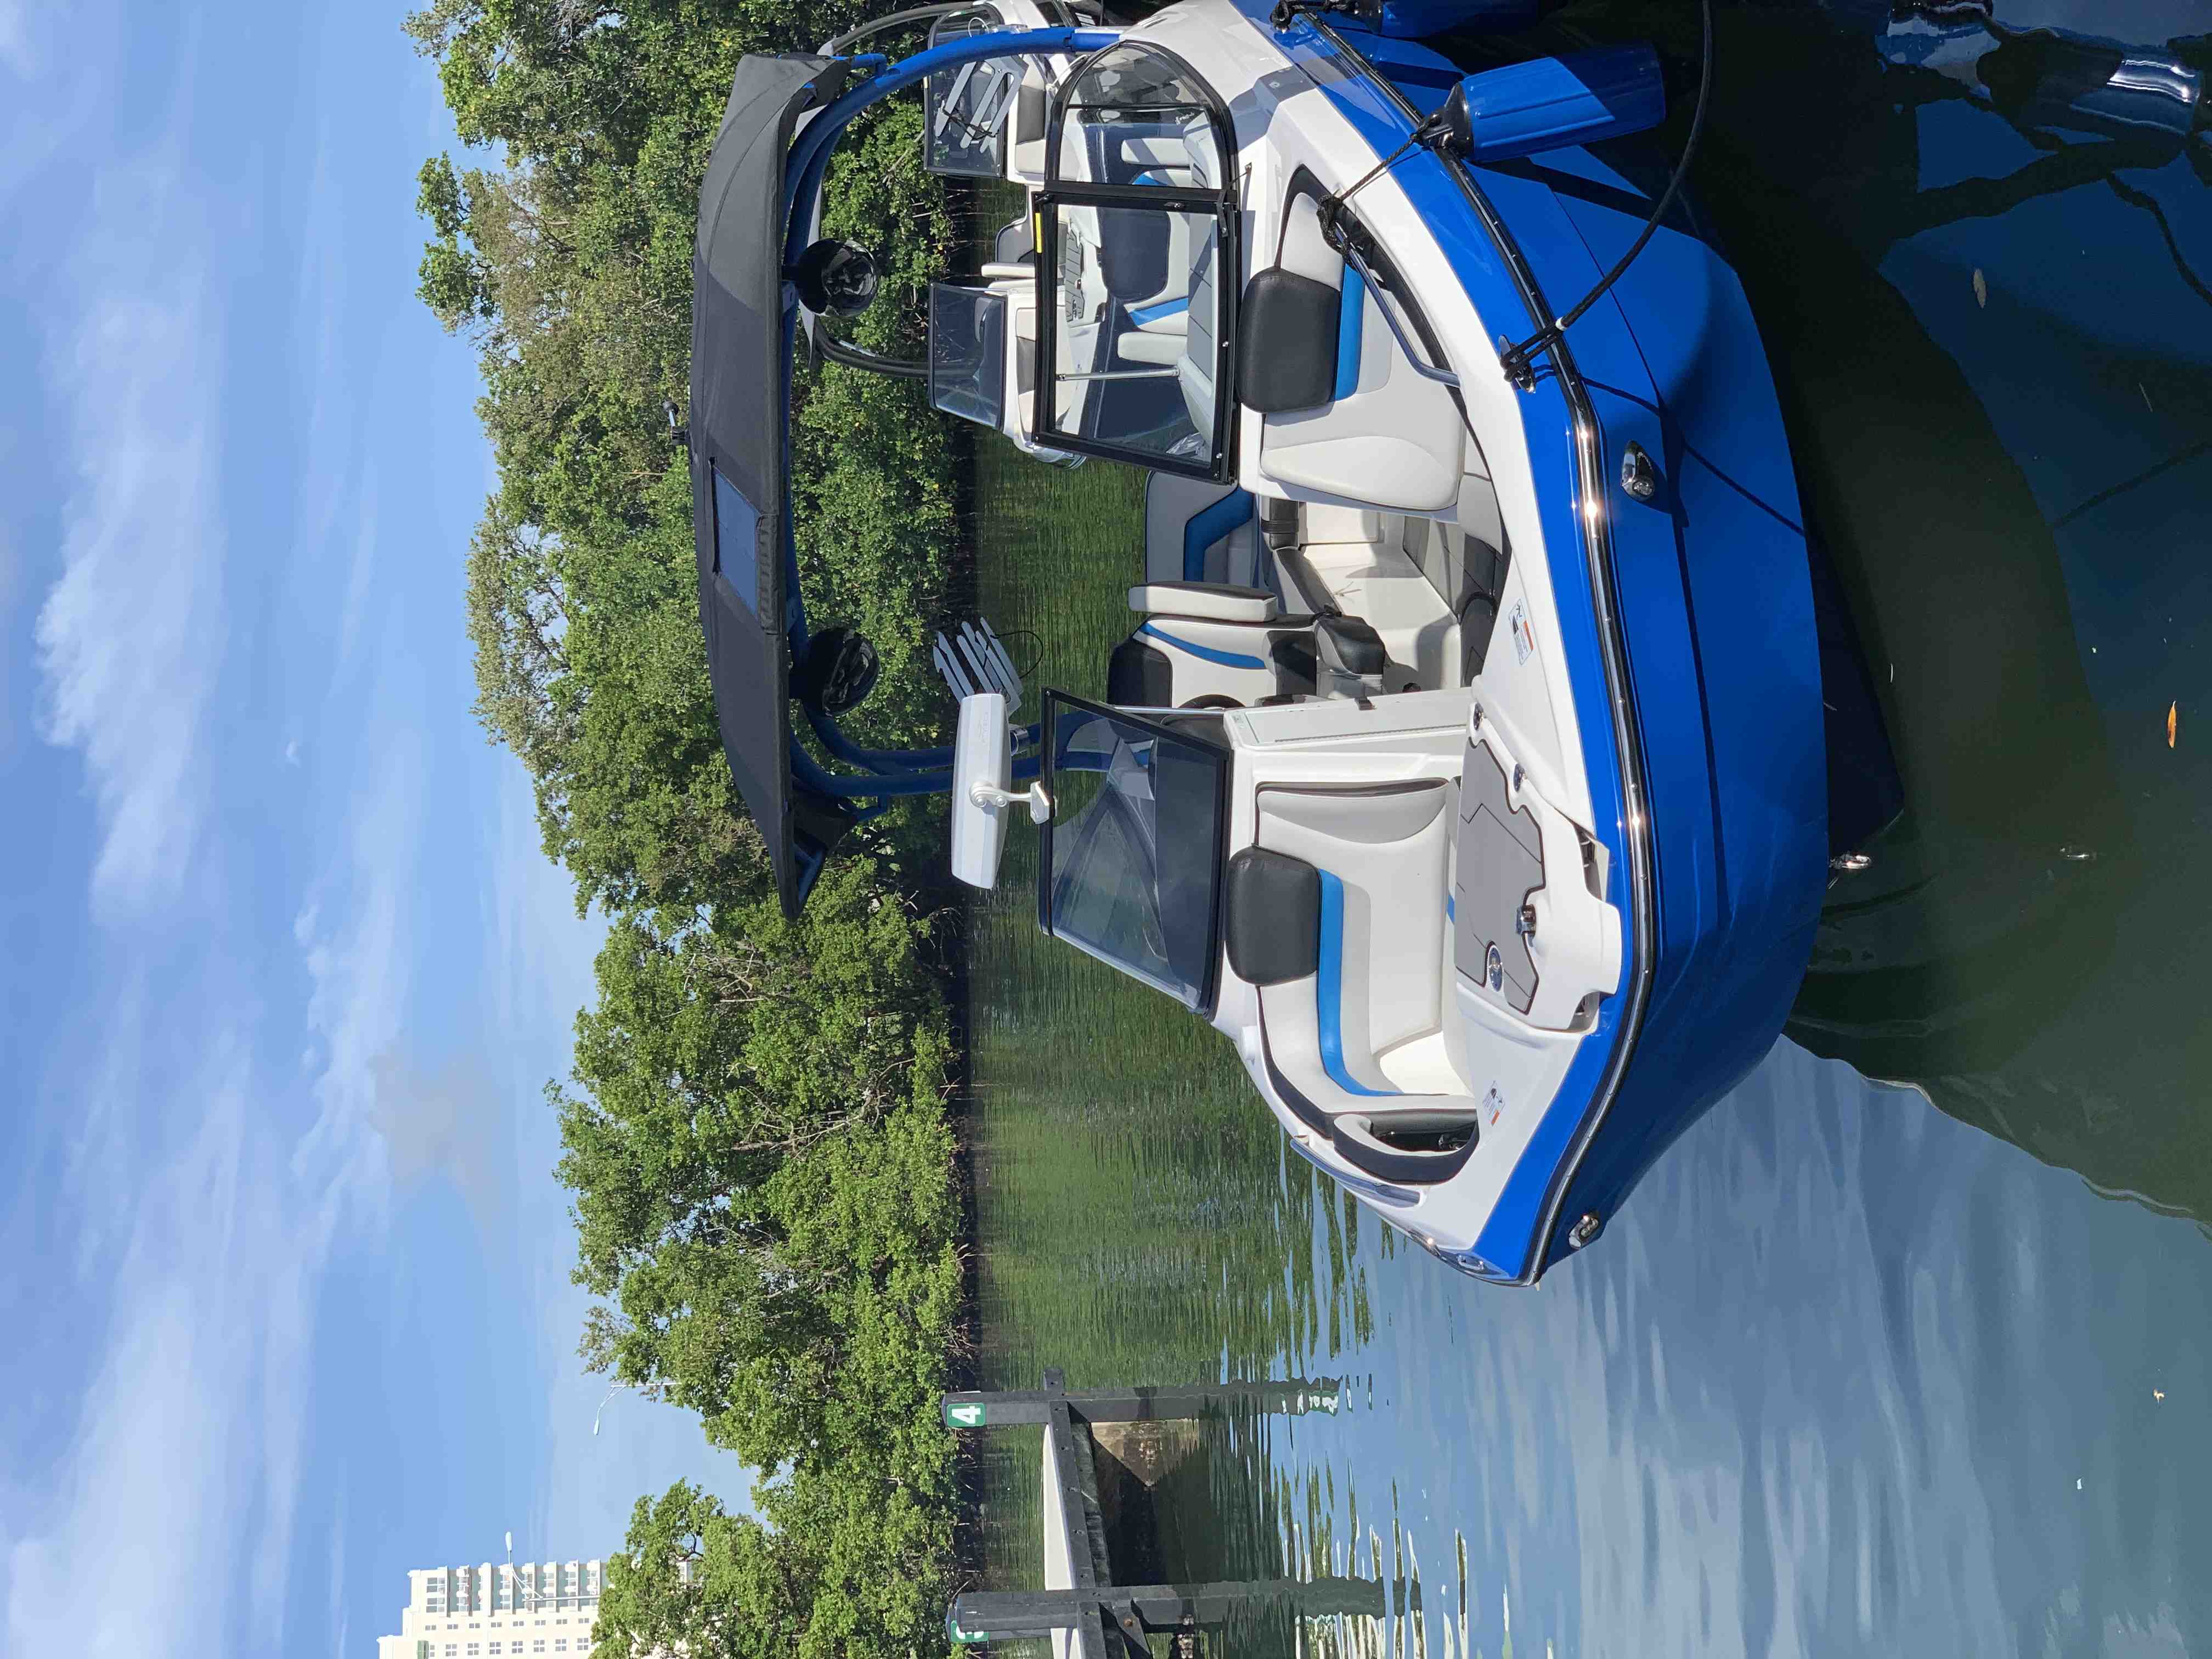  boat rentals Florida BOYNTON BEACH Florida  Yamaha AR242x 2019 24 